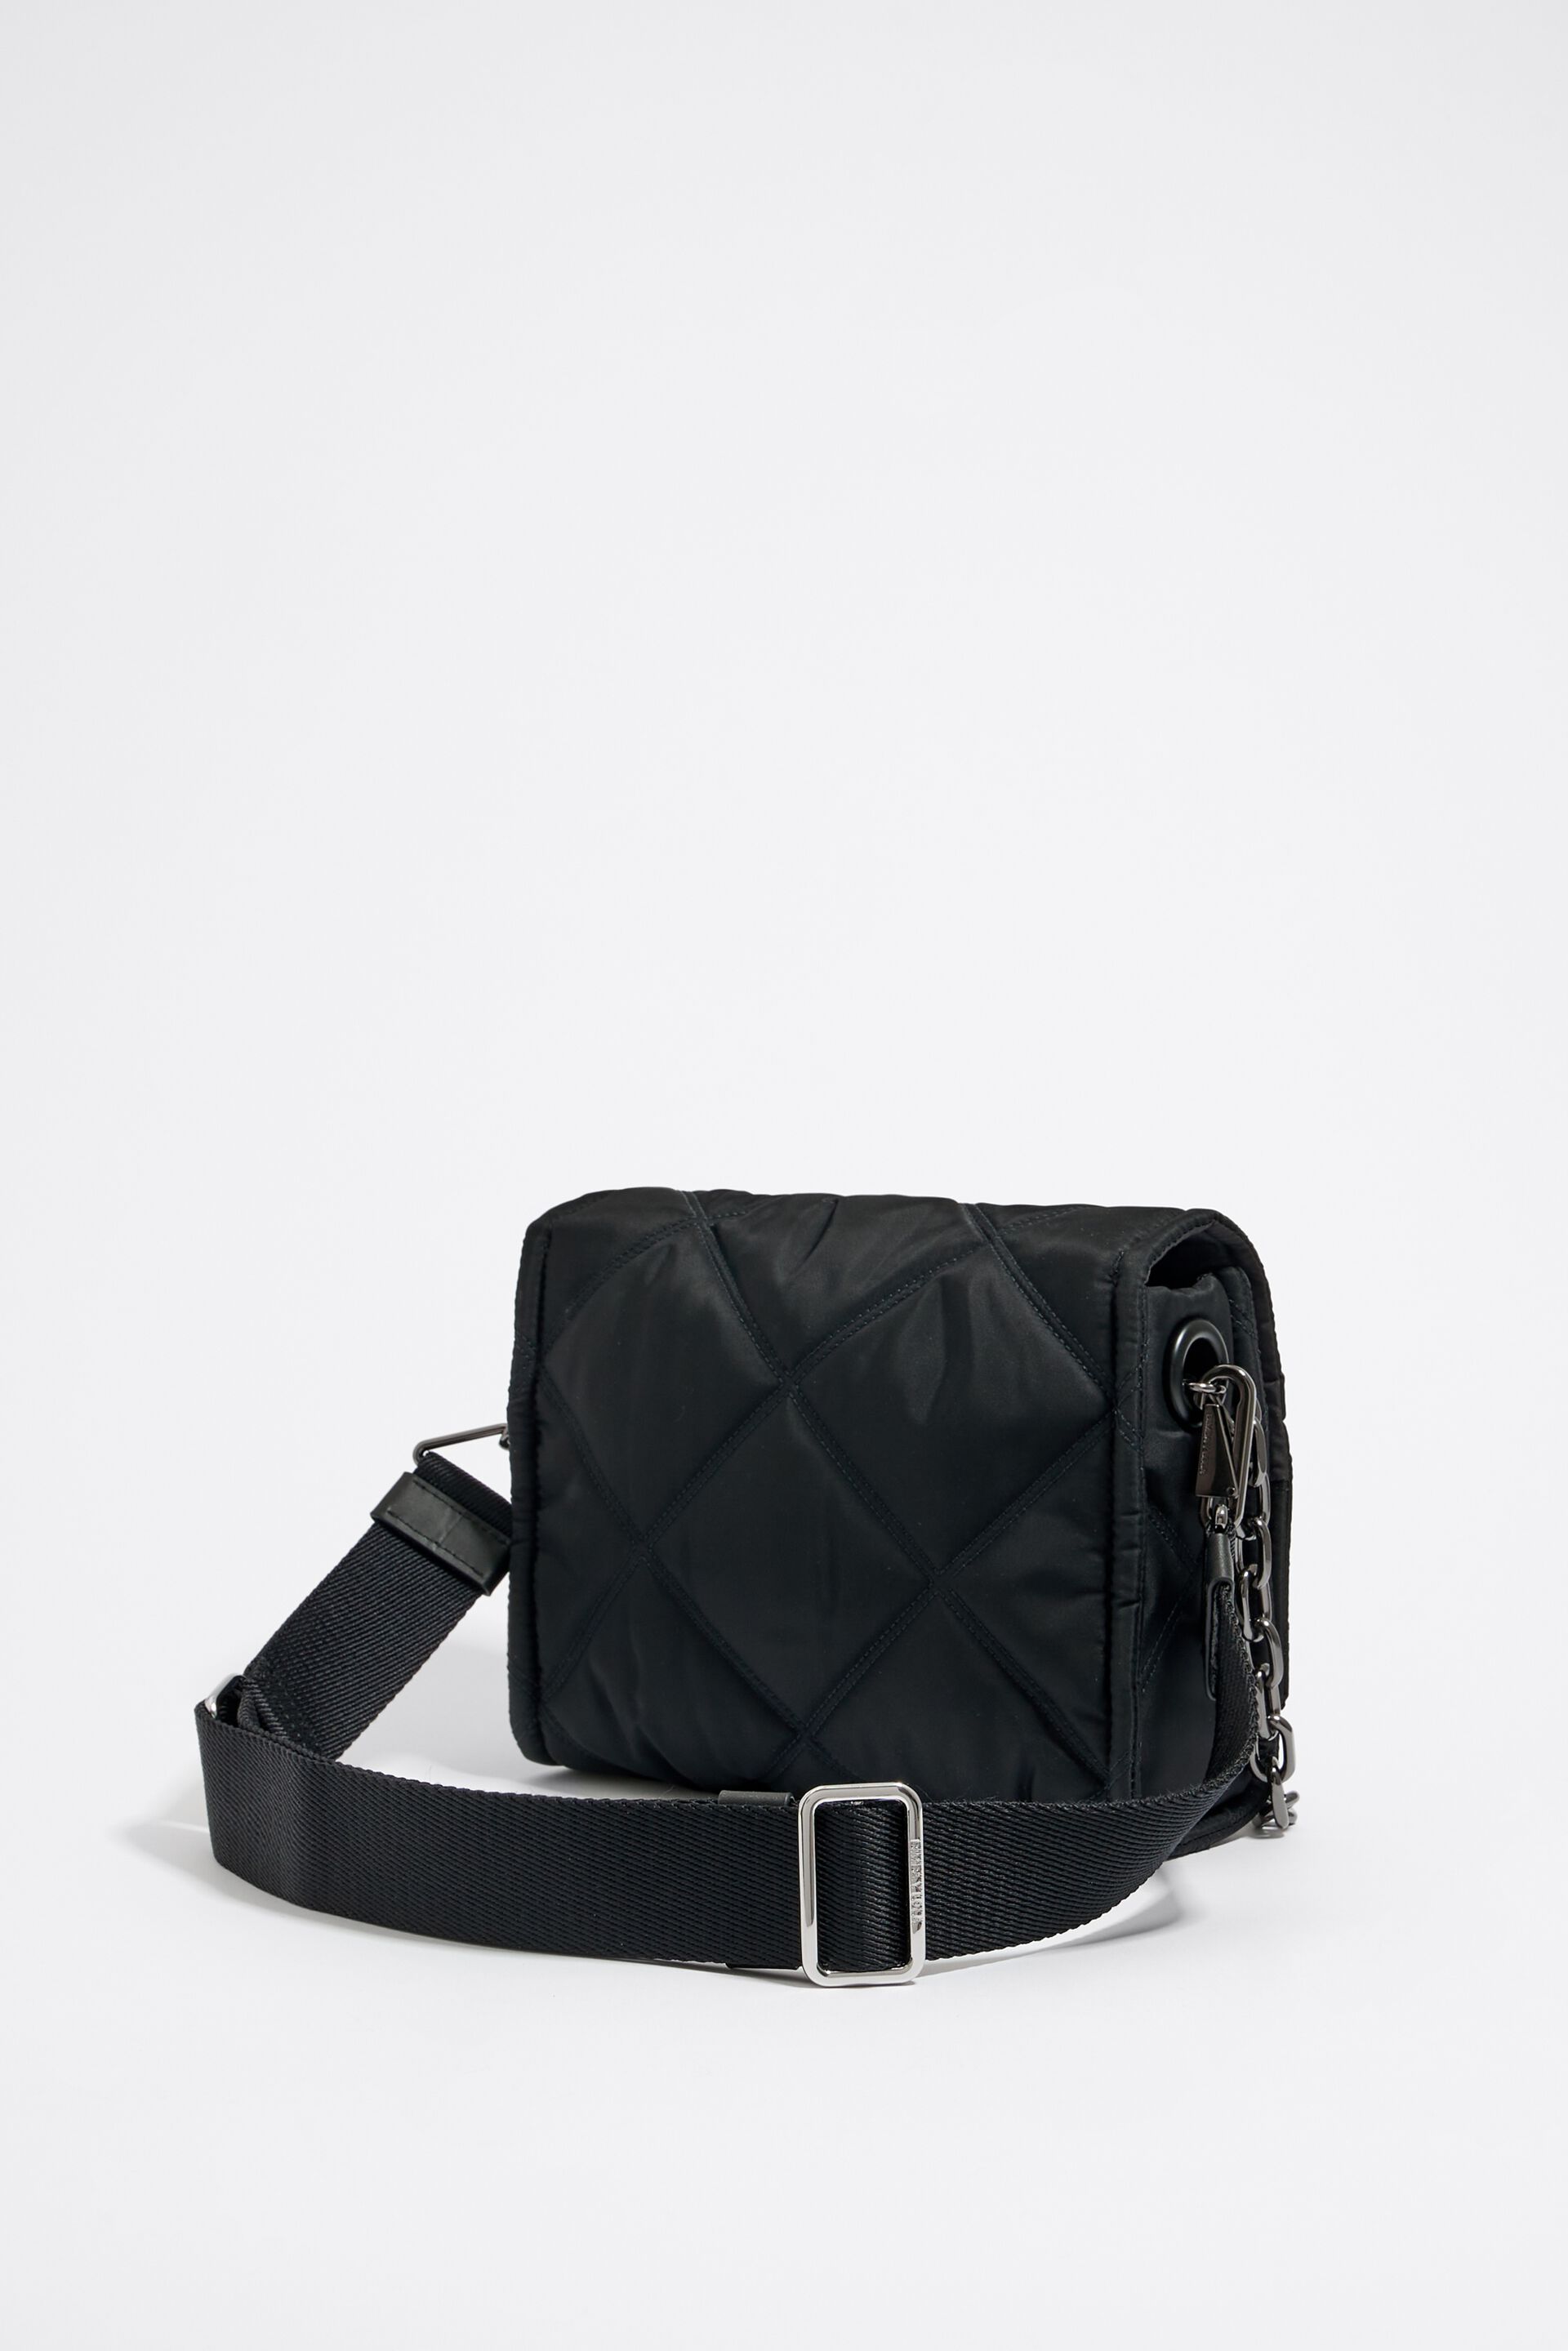 Handbag Bimba y Lola Black in Polyester - 25239691